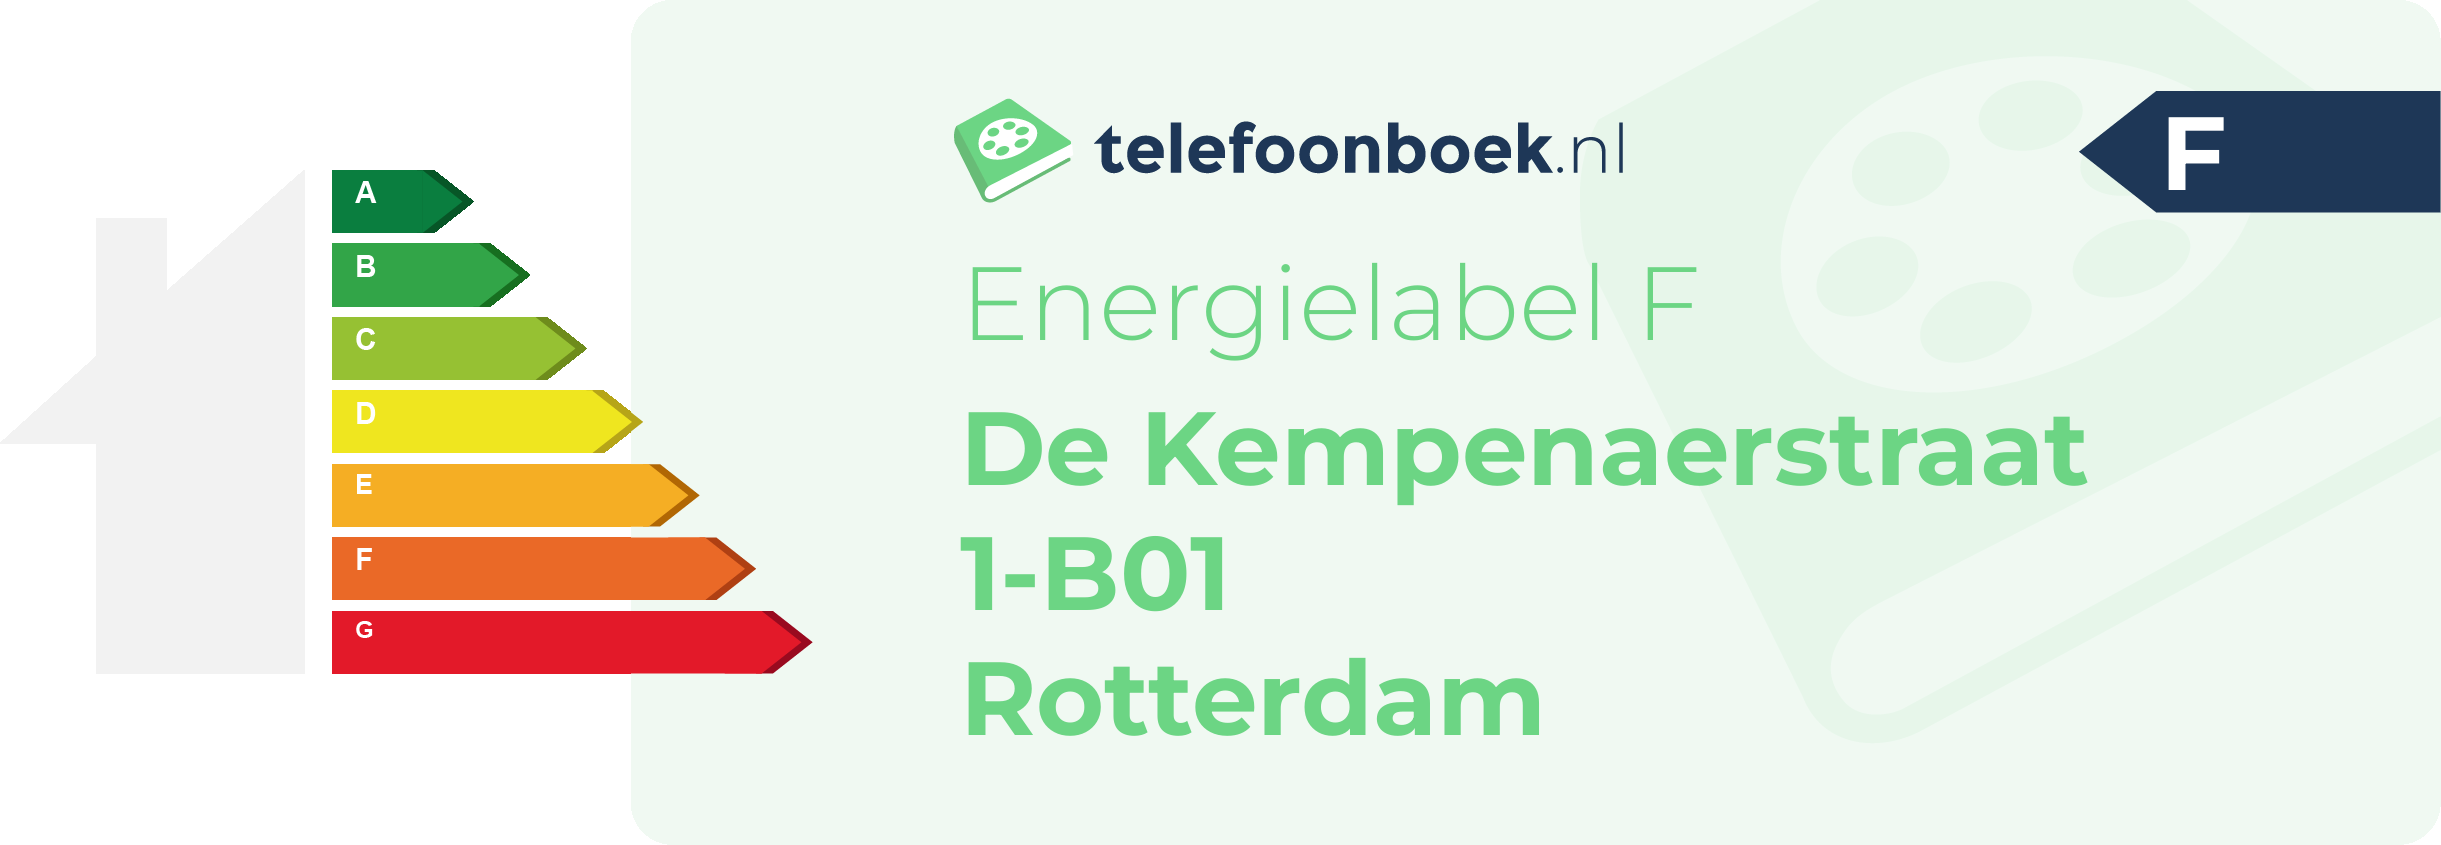 Energielabel De Kempenaerstraat 1-B01 Rotterdam